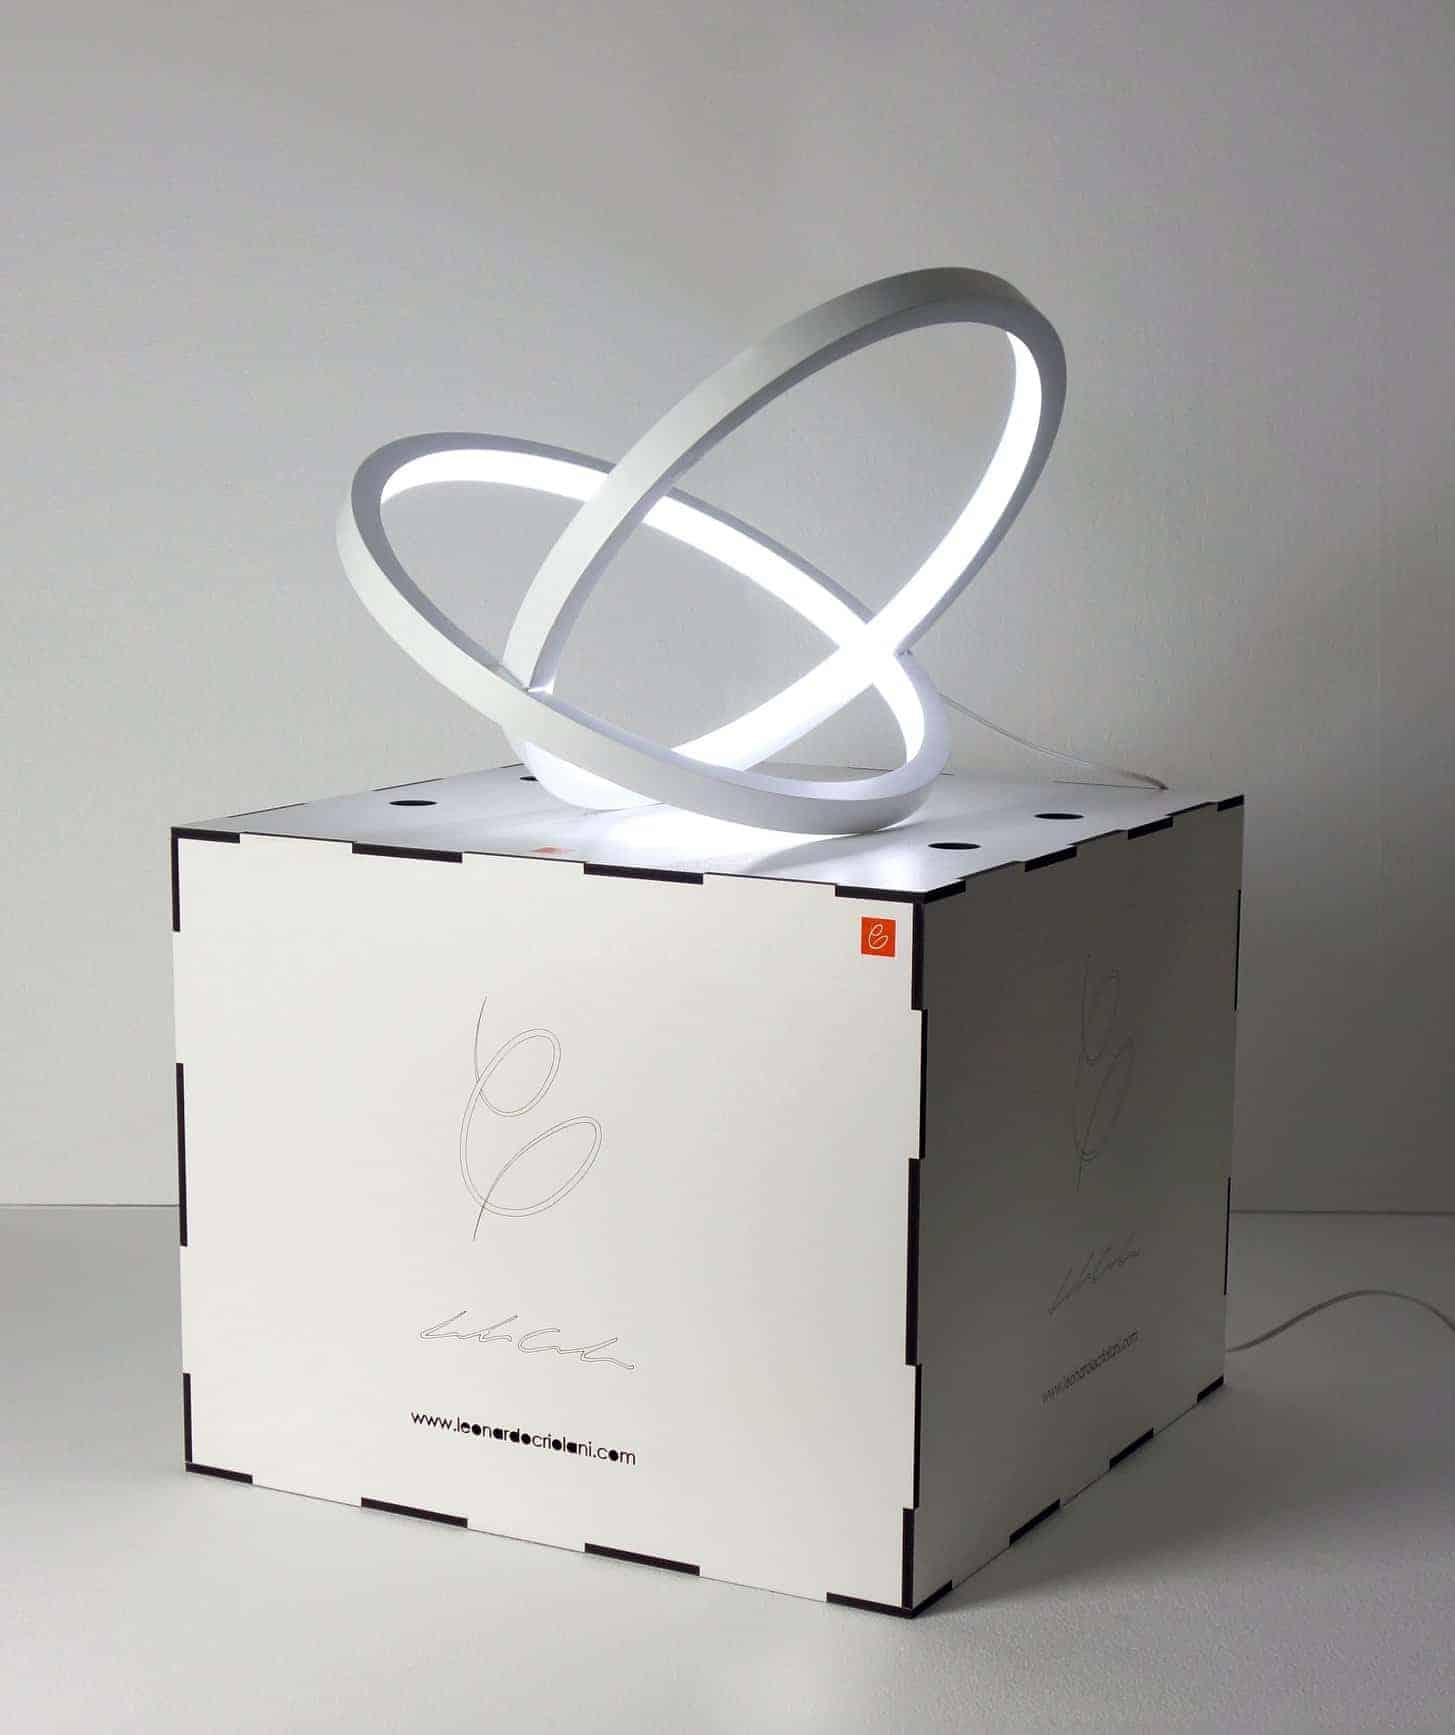 INFINITY - sculptural lamp & packaging